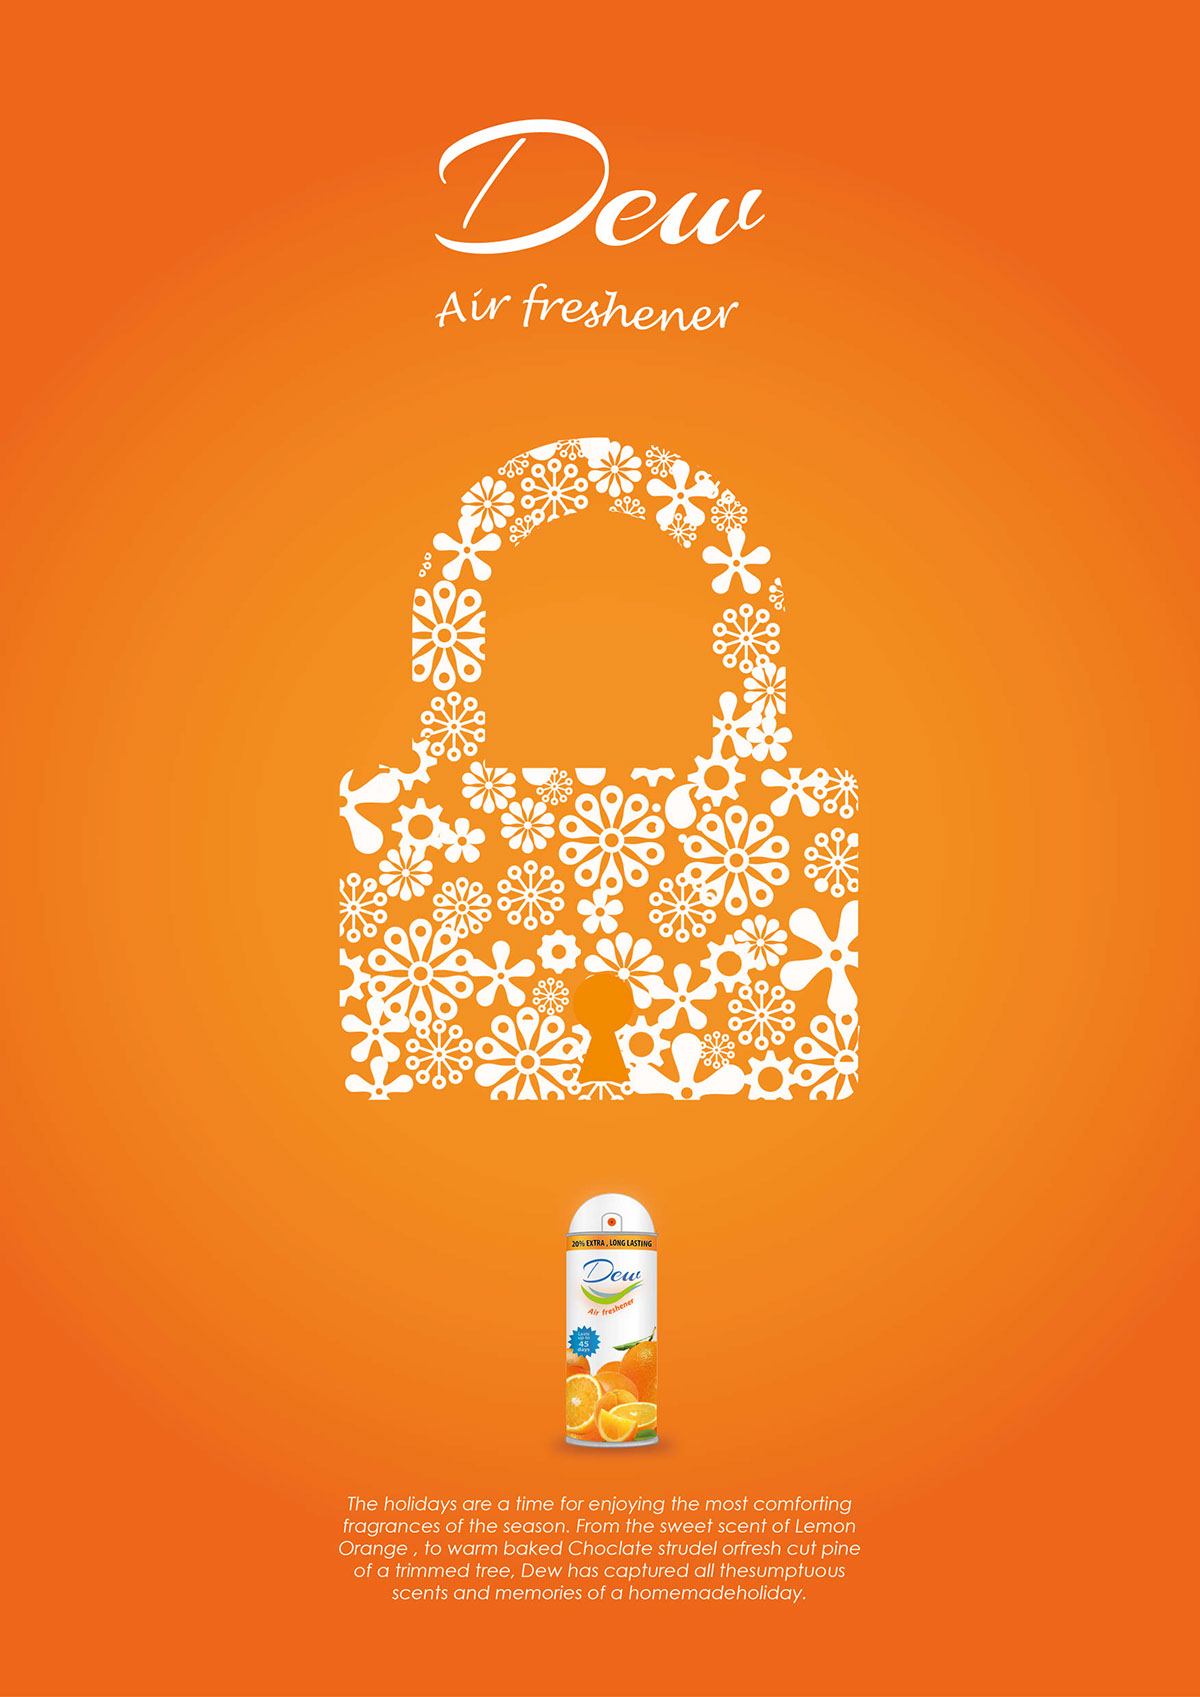 Dew Air freshener